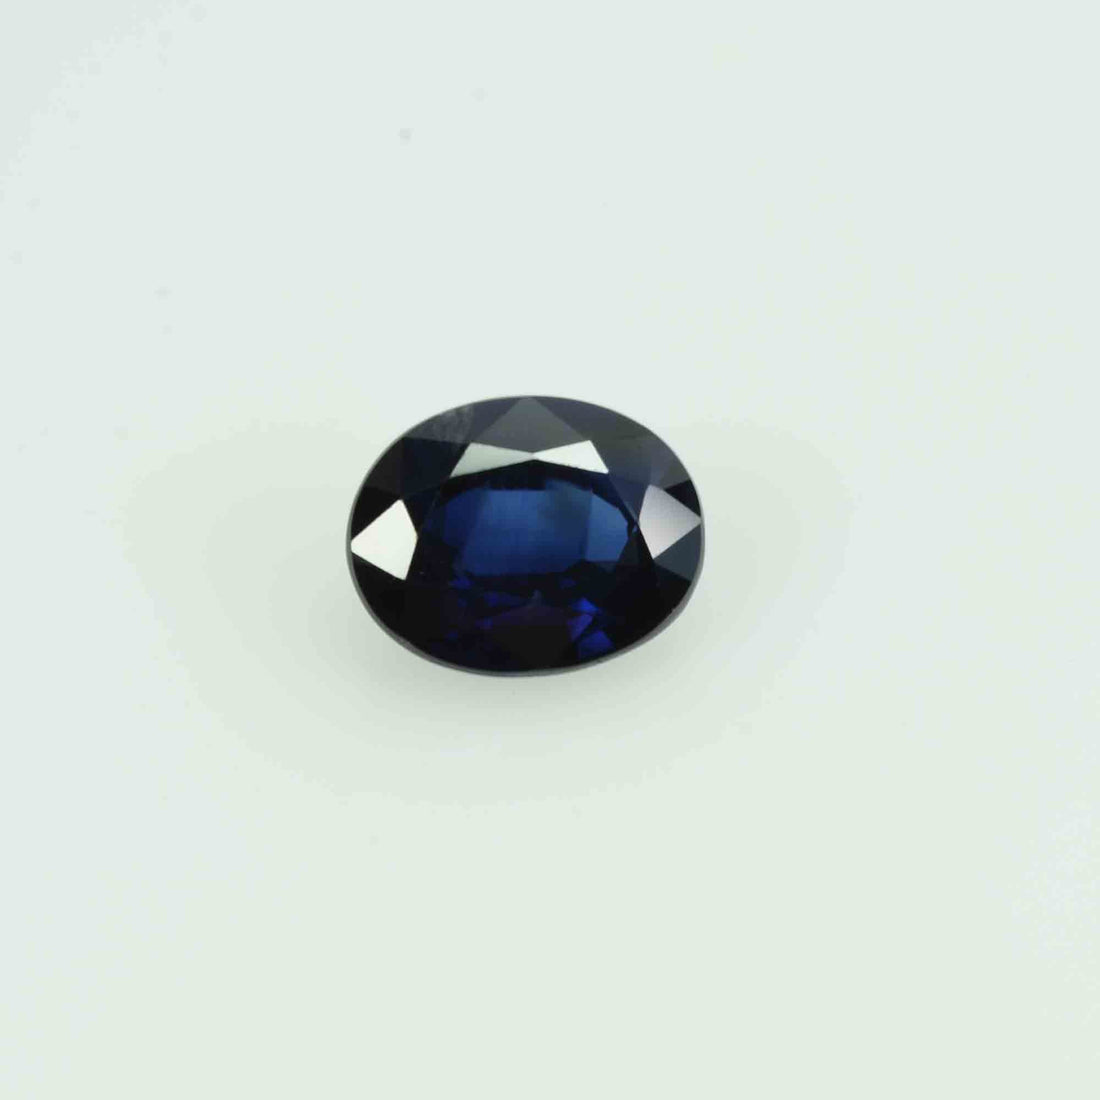 1.02 cts Natural Blue Sapphire Loose Gemstone Oval Cut - Thai Gems Export Ltd.